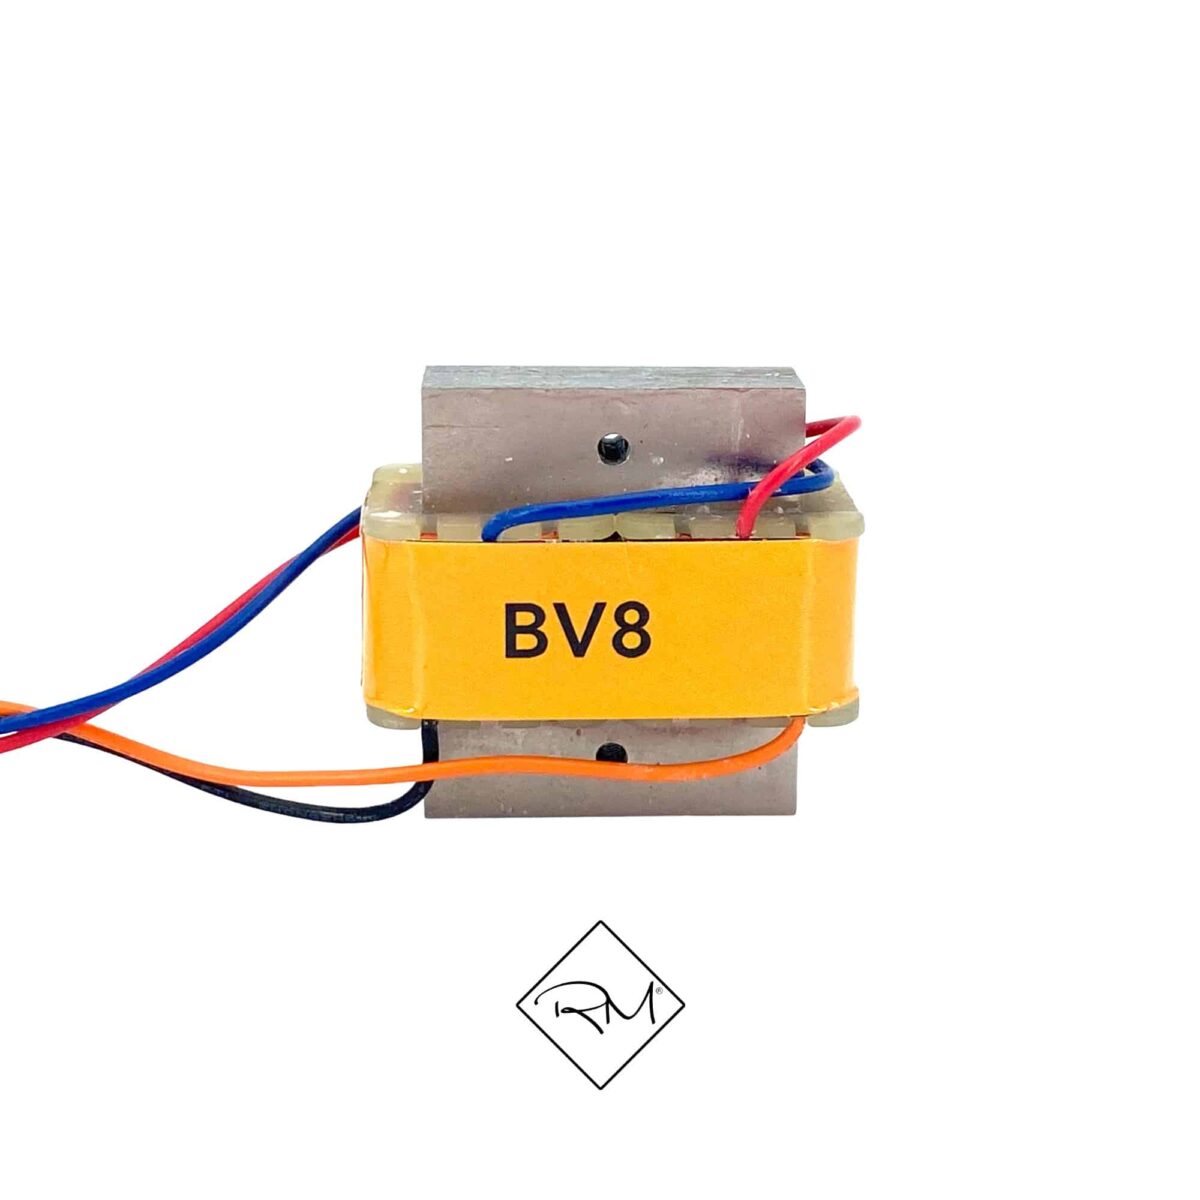 Output transformer BV8